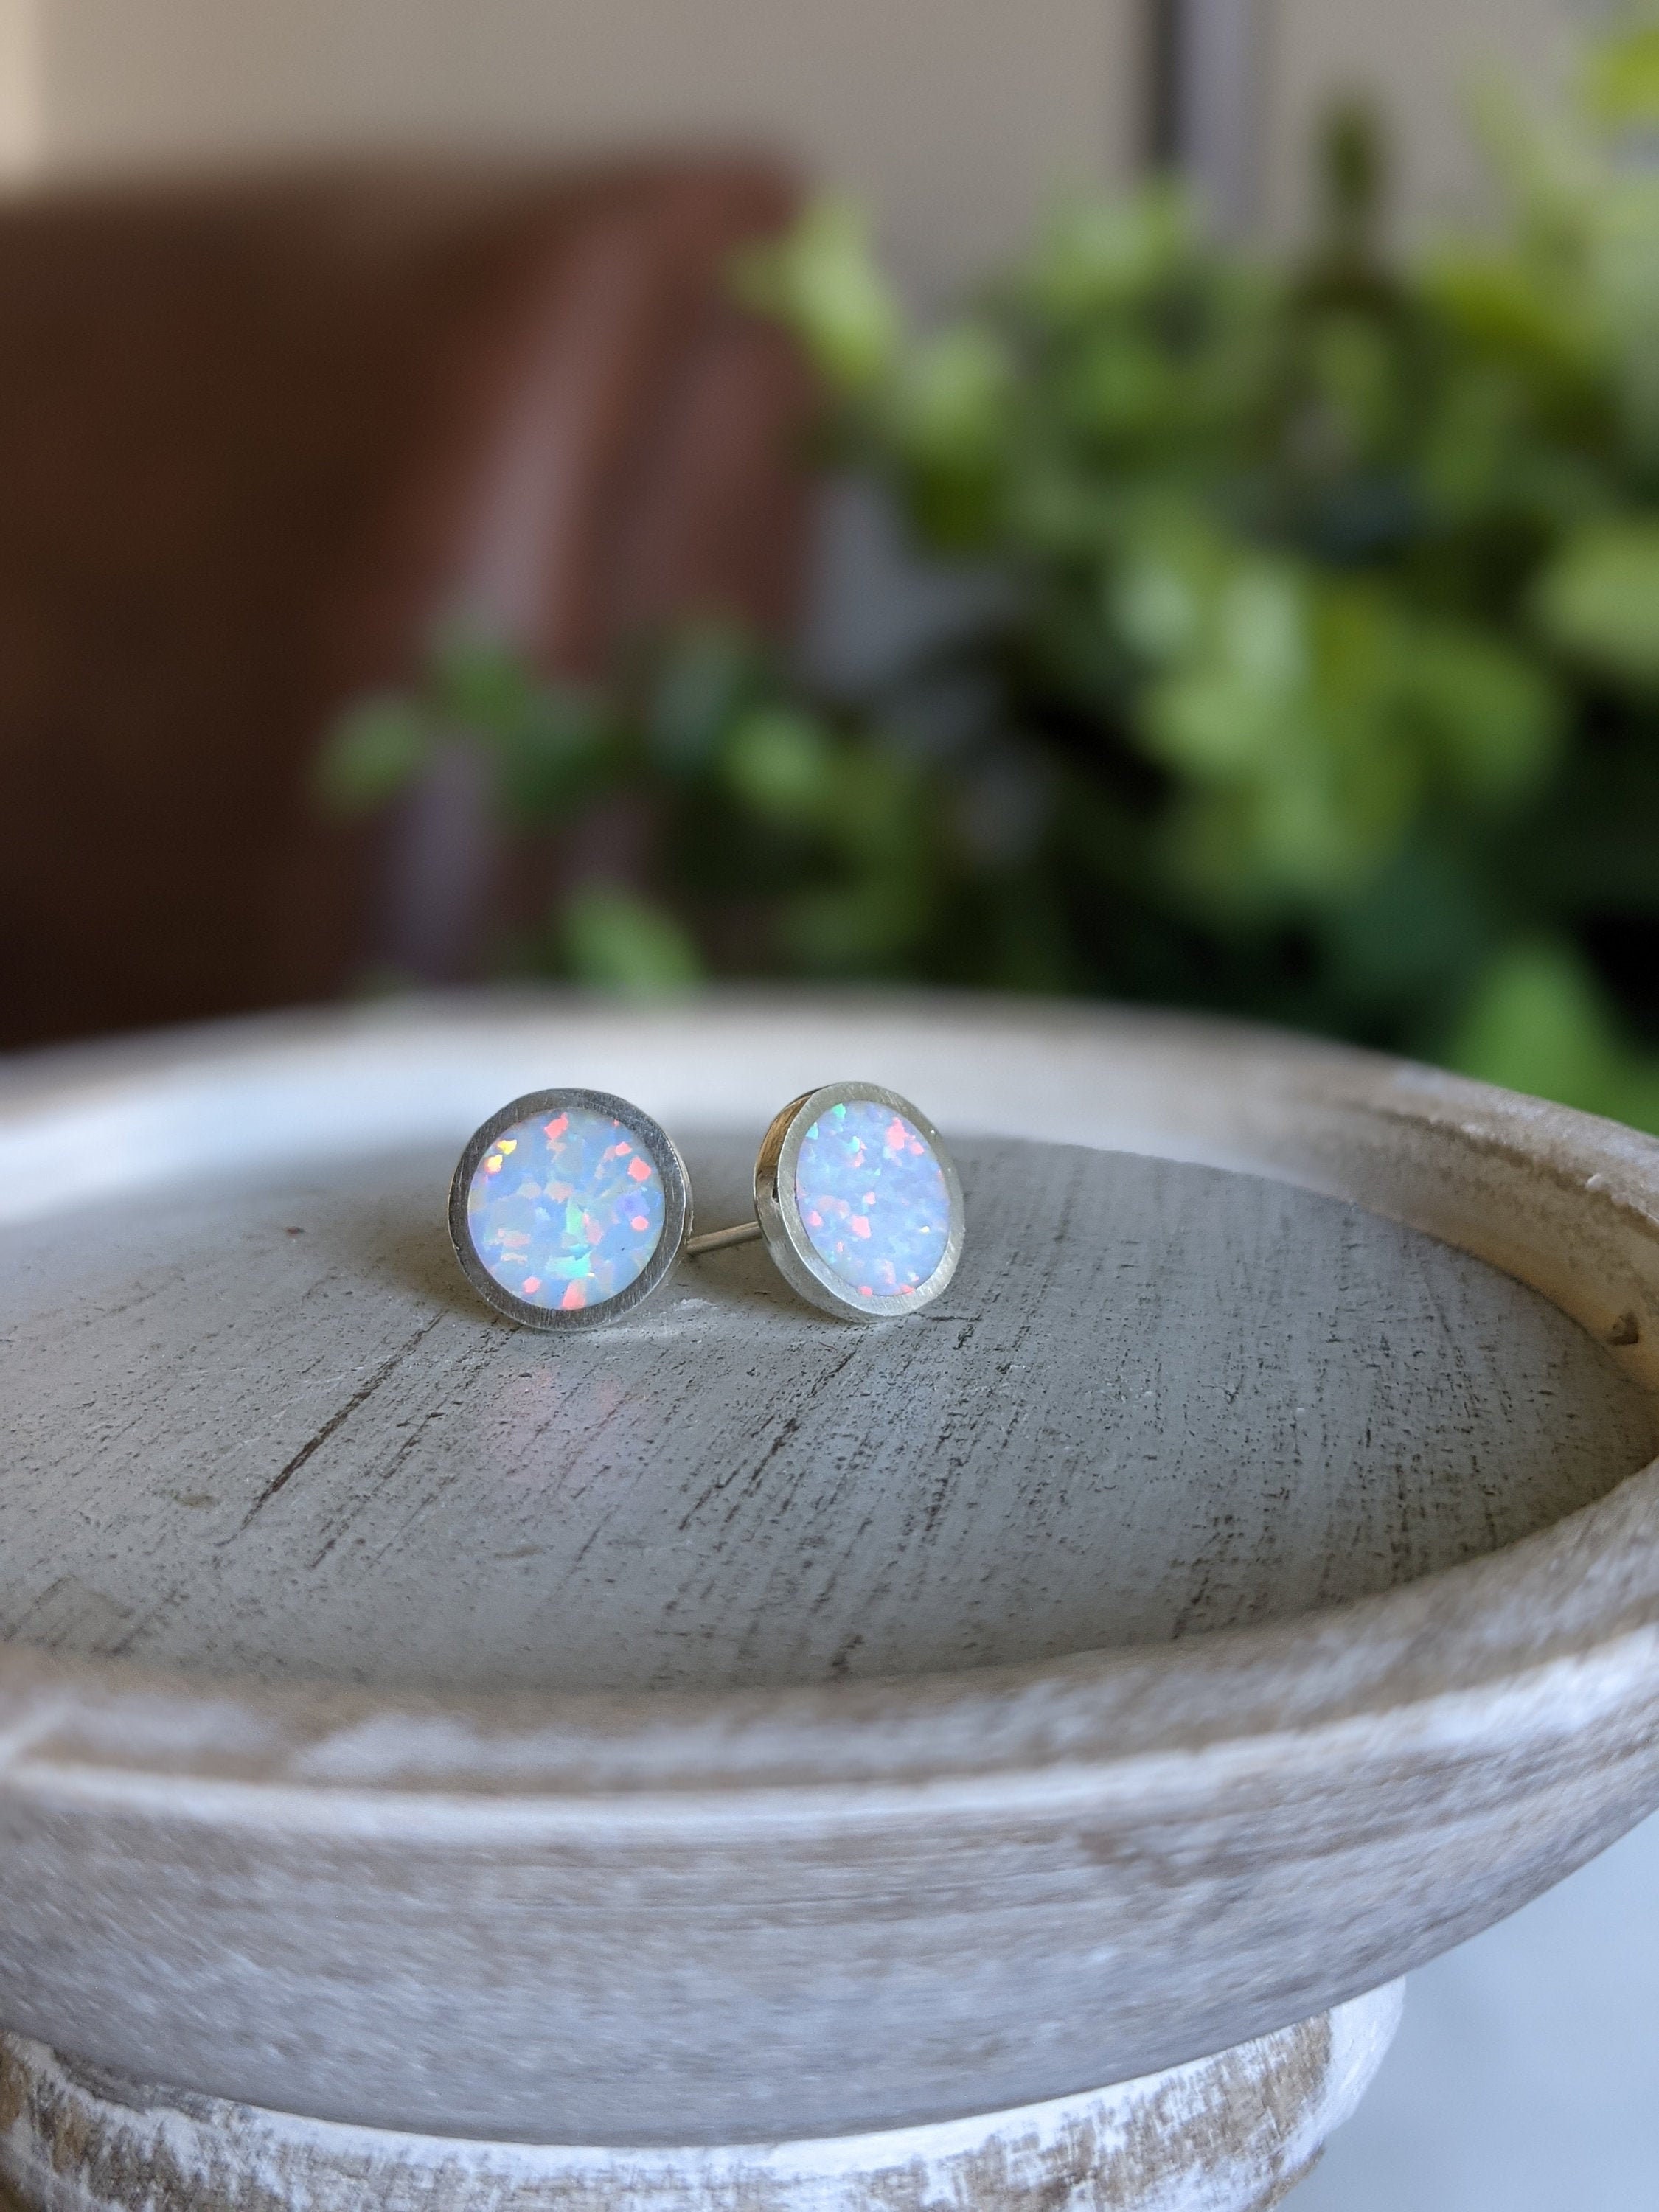 Share more than 134 fake opal earrings latest